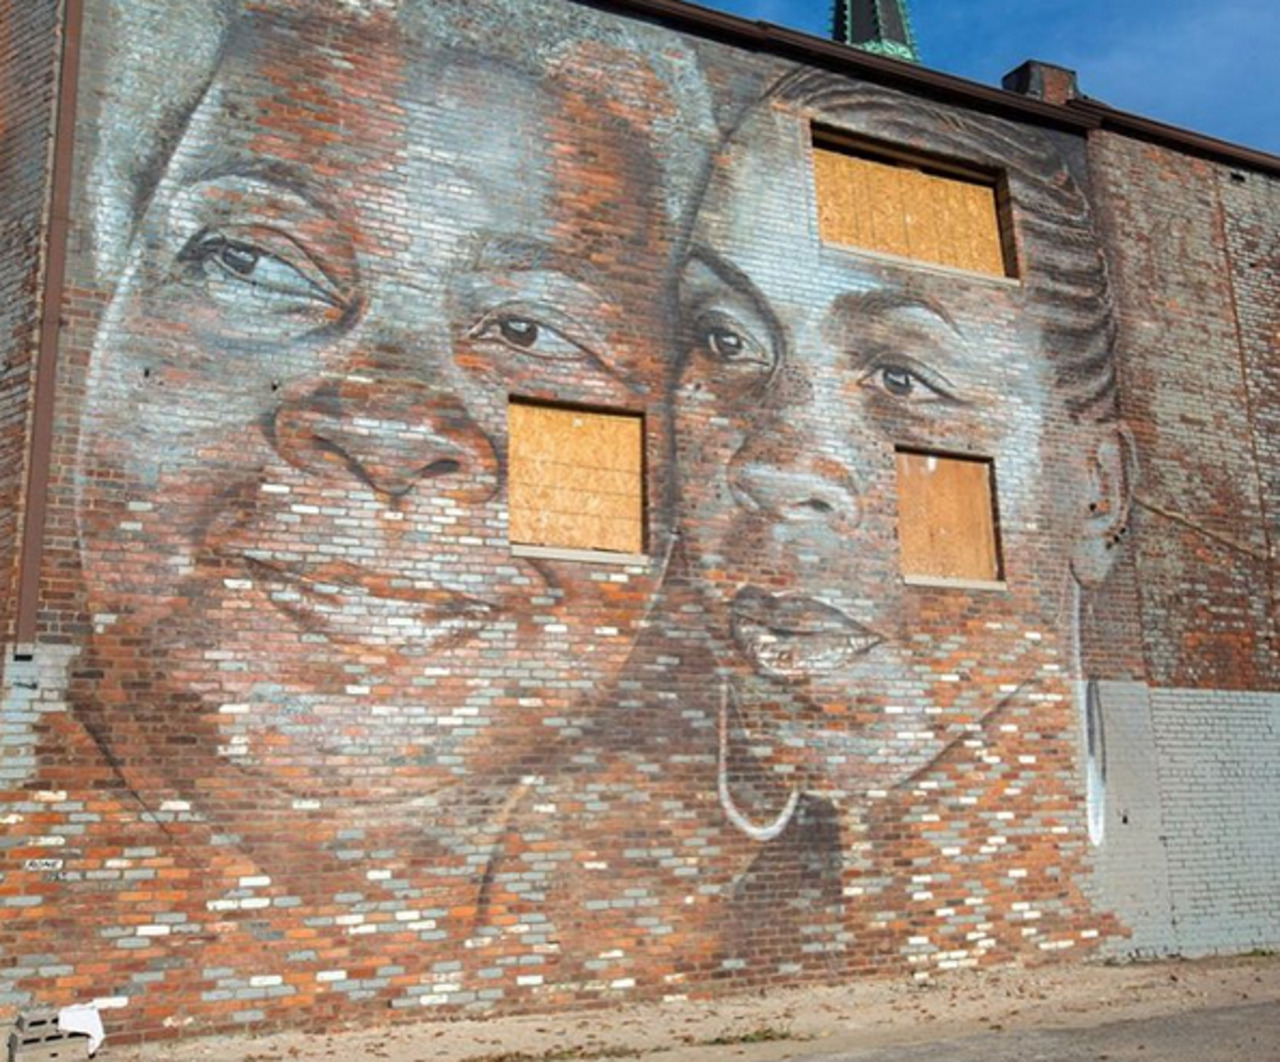 RT @allcitycanvas: Another portrait beauty by #Rone in Detroit for @MarketMurals and @1xrun #streetart #urbanart #graffiti http://t.co/Ml7A0sZgNM